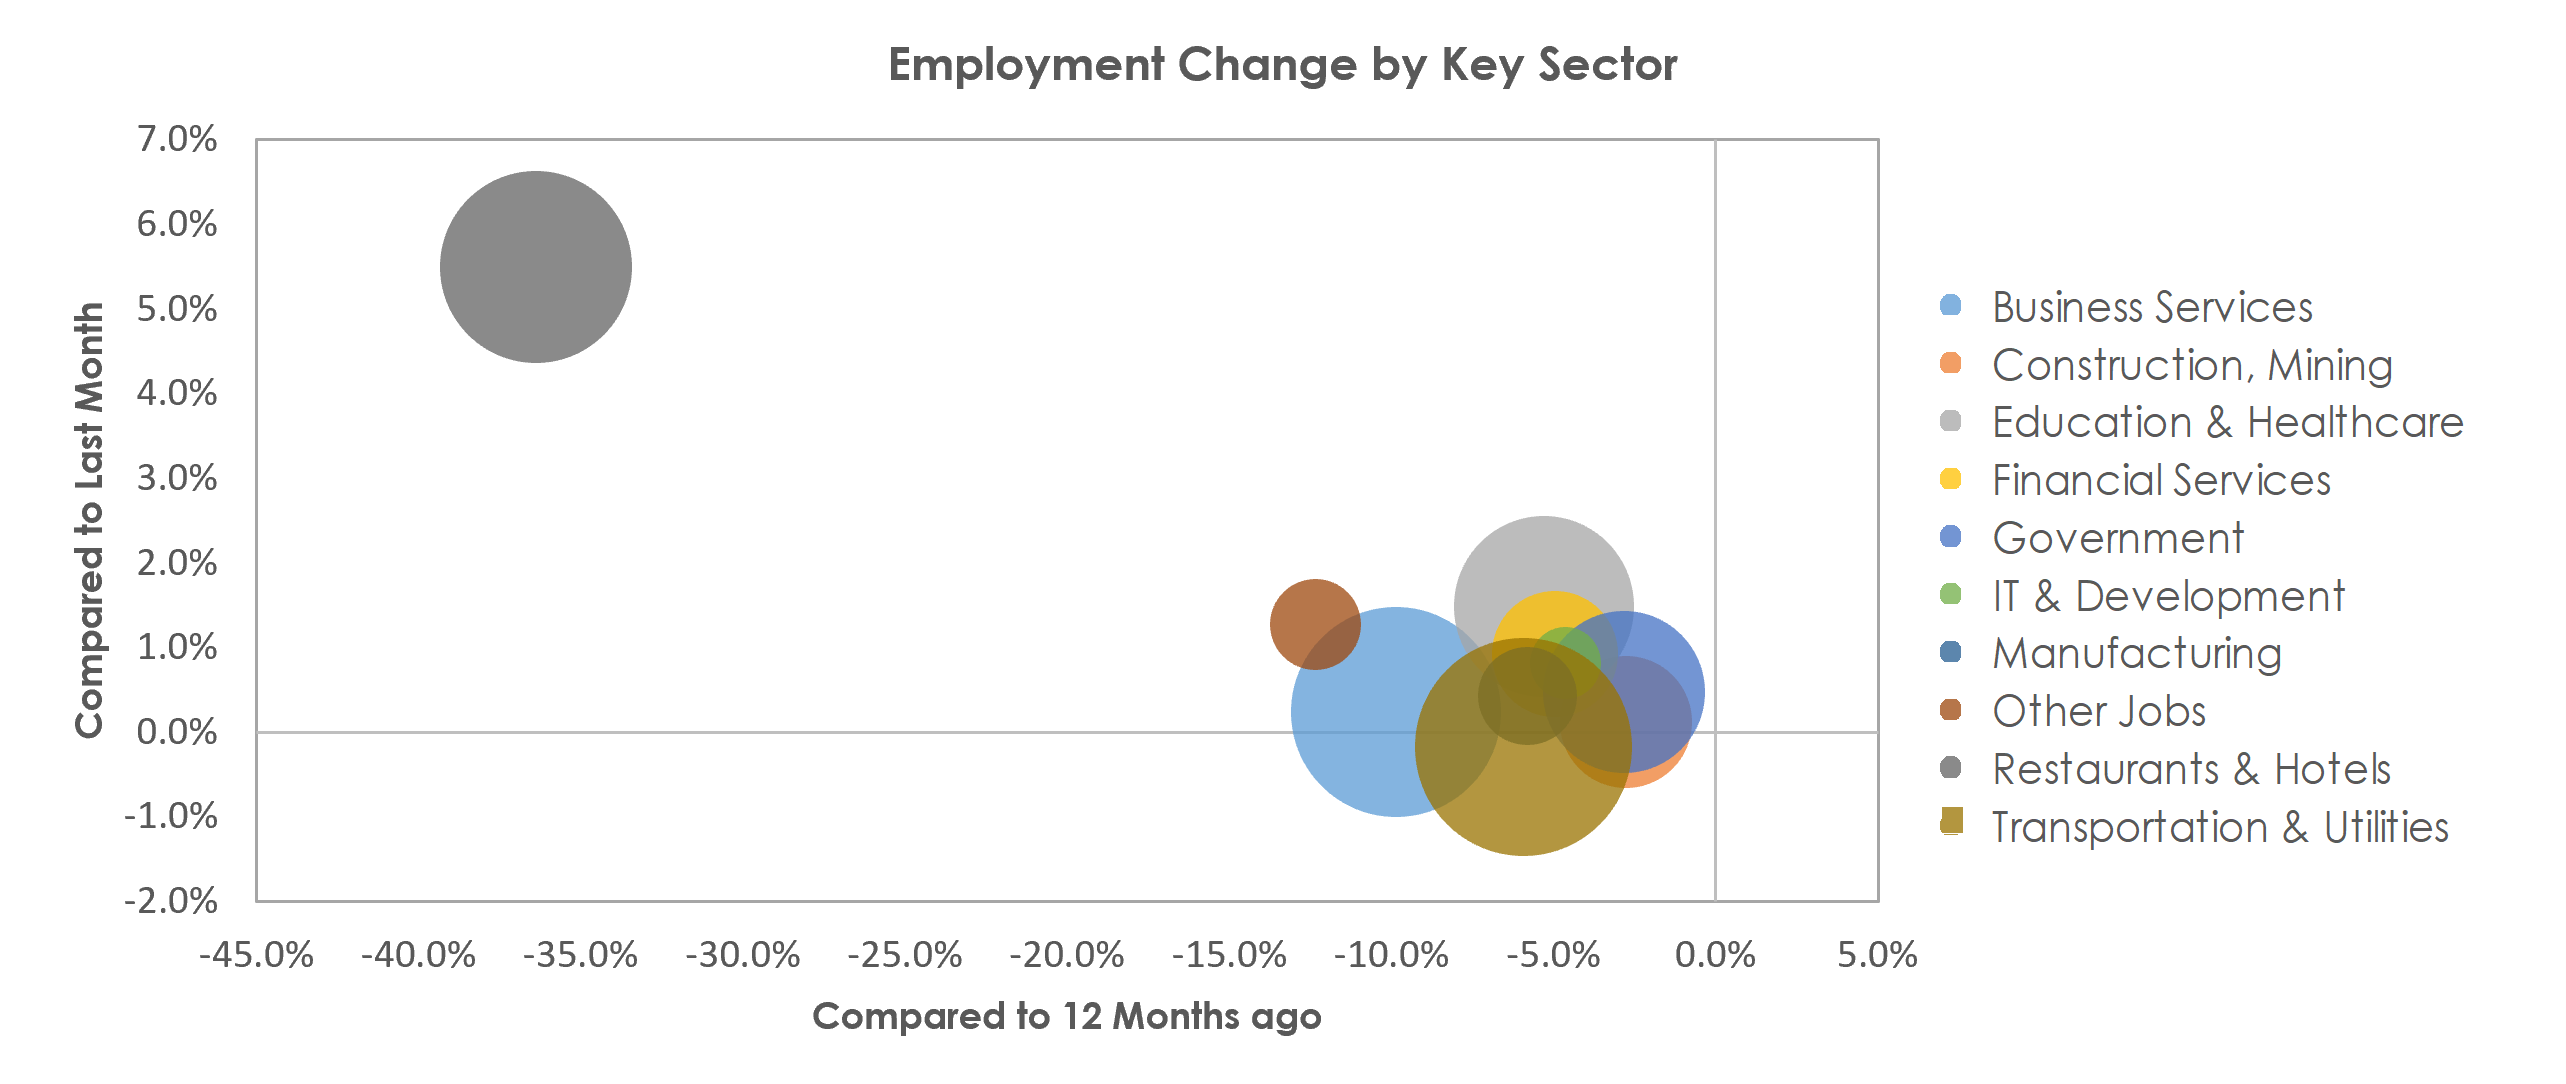 Orlando-Kissimmee-Sanford, FL Unemployment by Industry February 2021